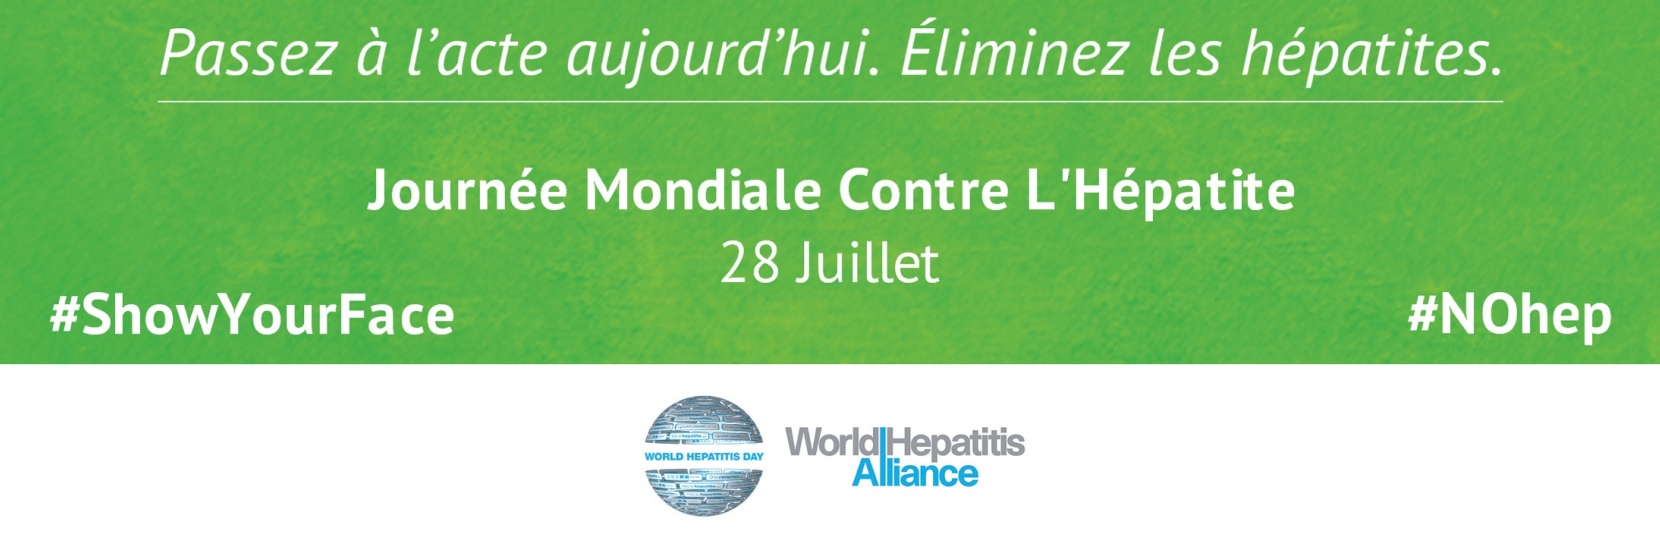 World Hepatitis Day: ELIMINATE HEPATITIS